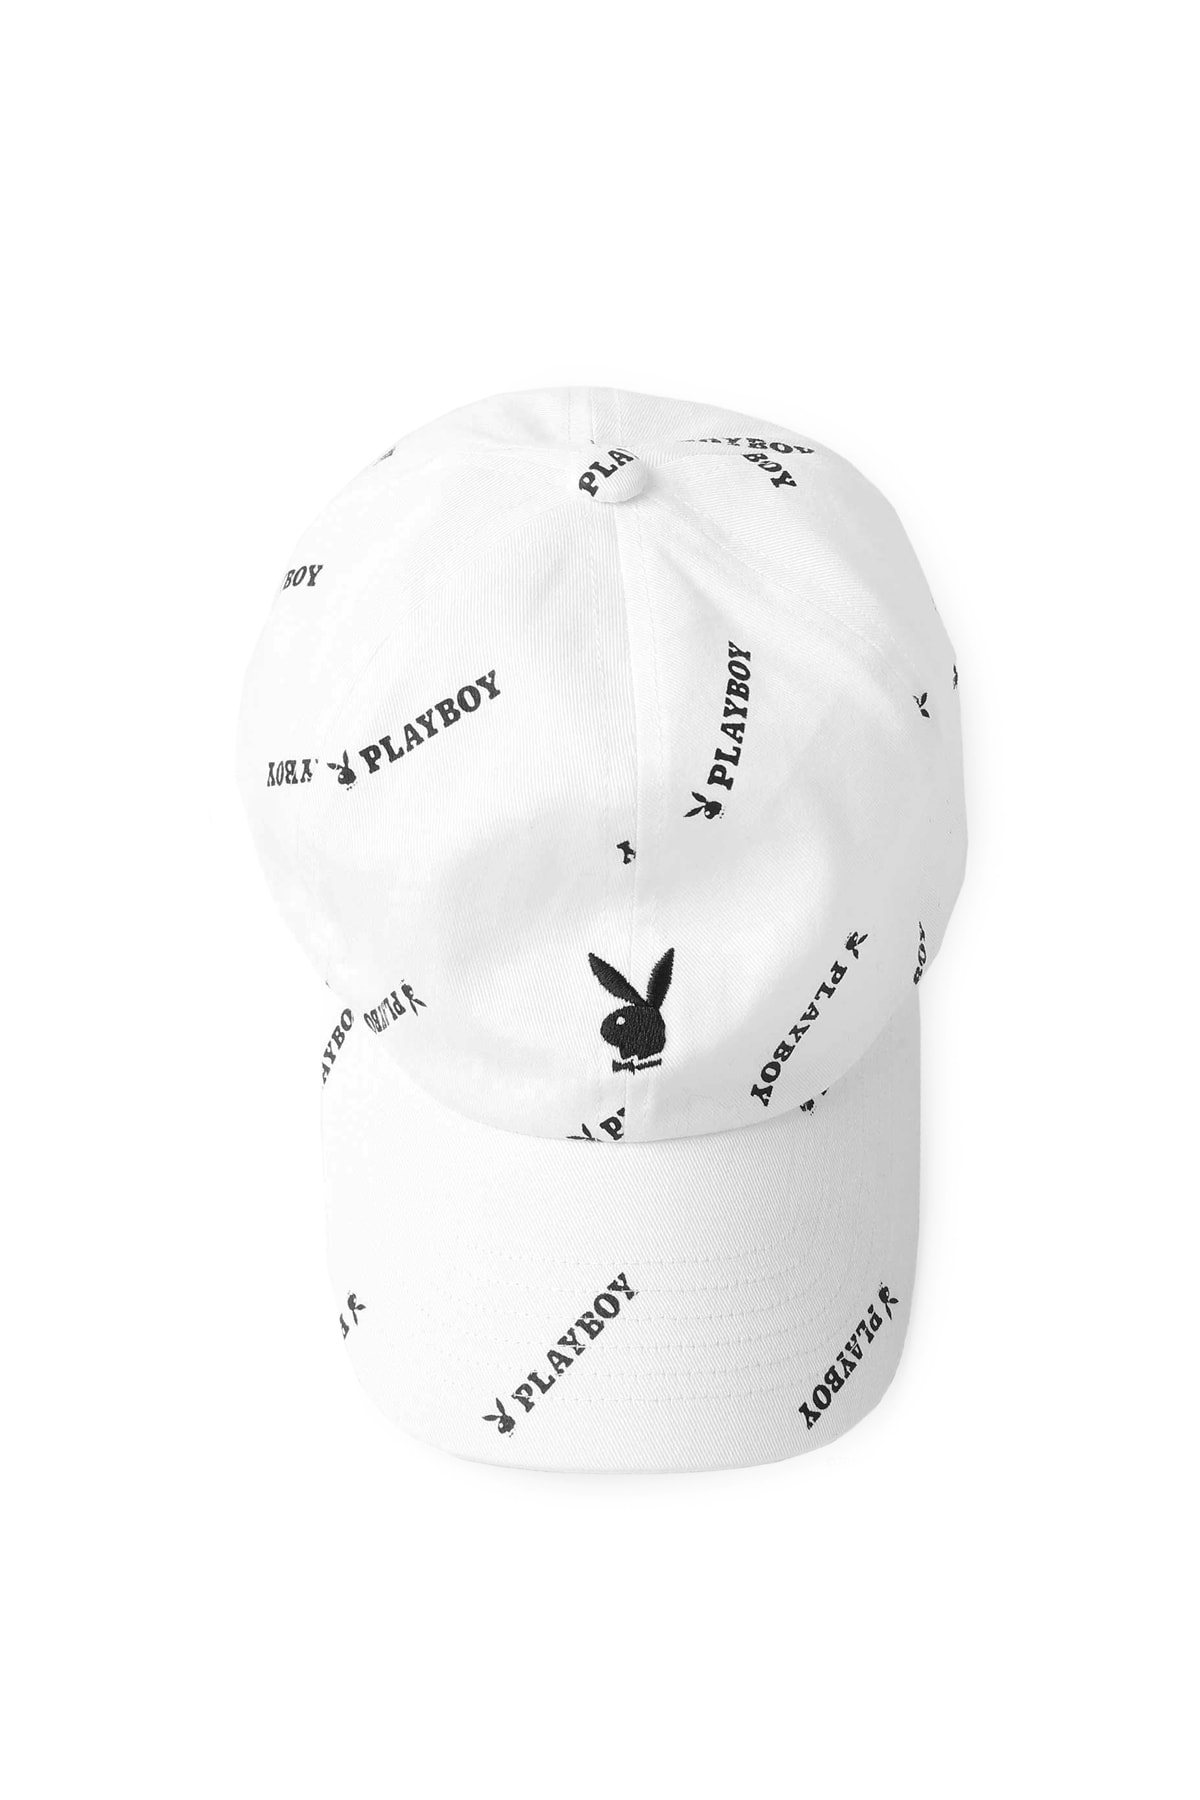 Playboy FREAK'S STORE Capsule Collection T Shirt Cap Hat